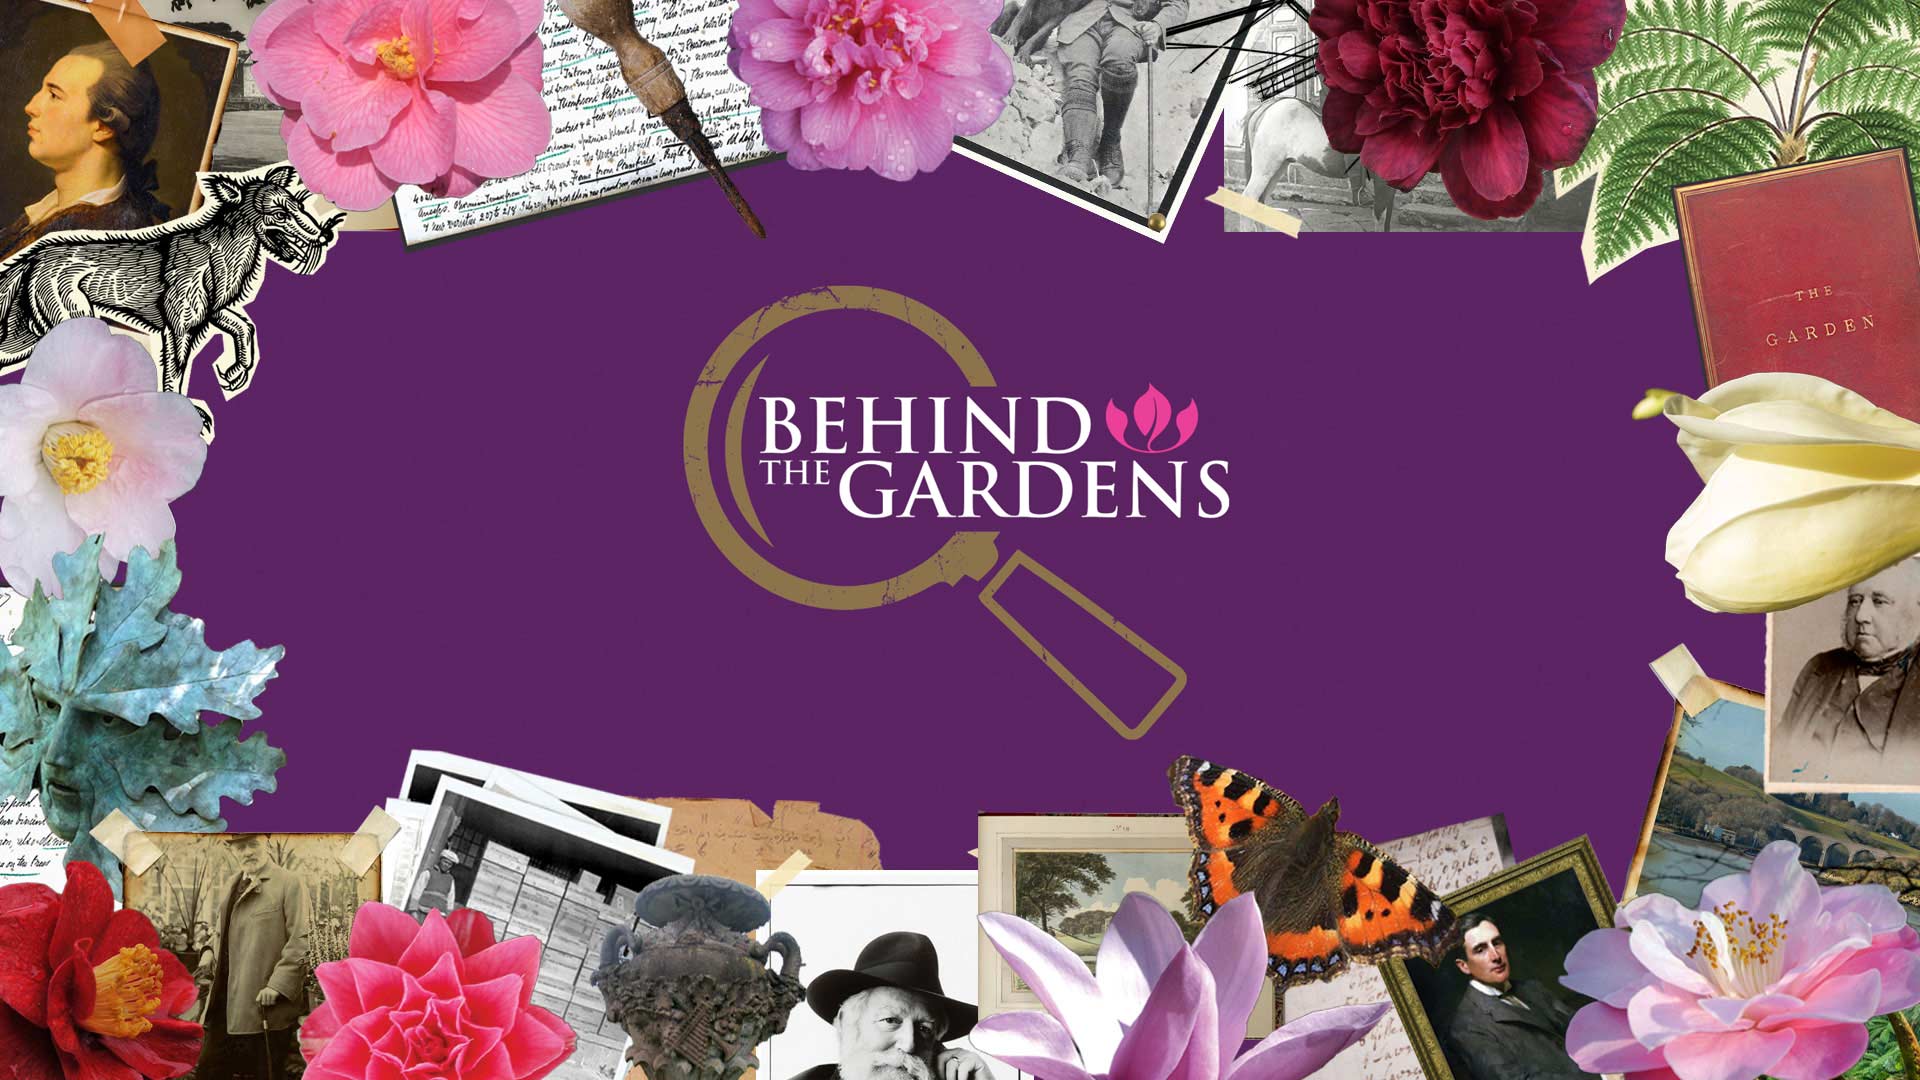 Great-Gardens-behind-the-gardens-logo-with-image-banner-Idenna-Creative